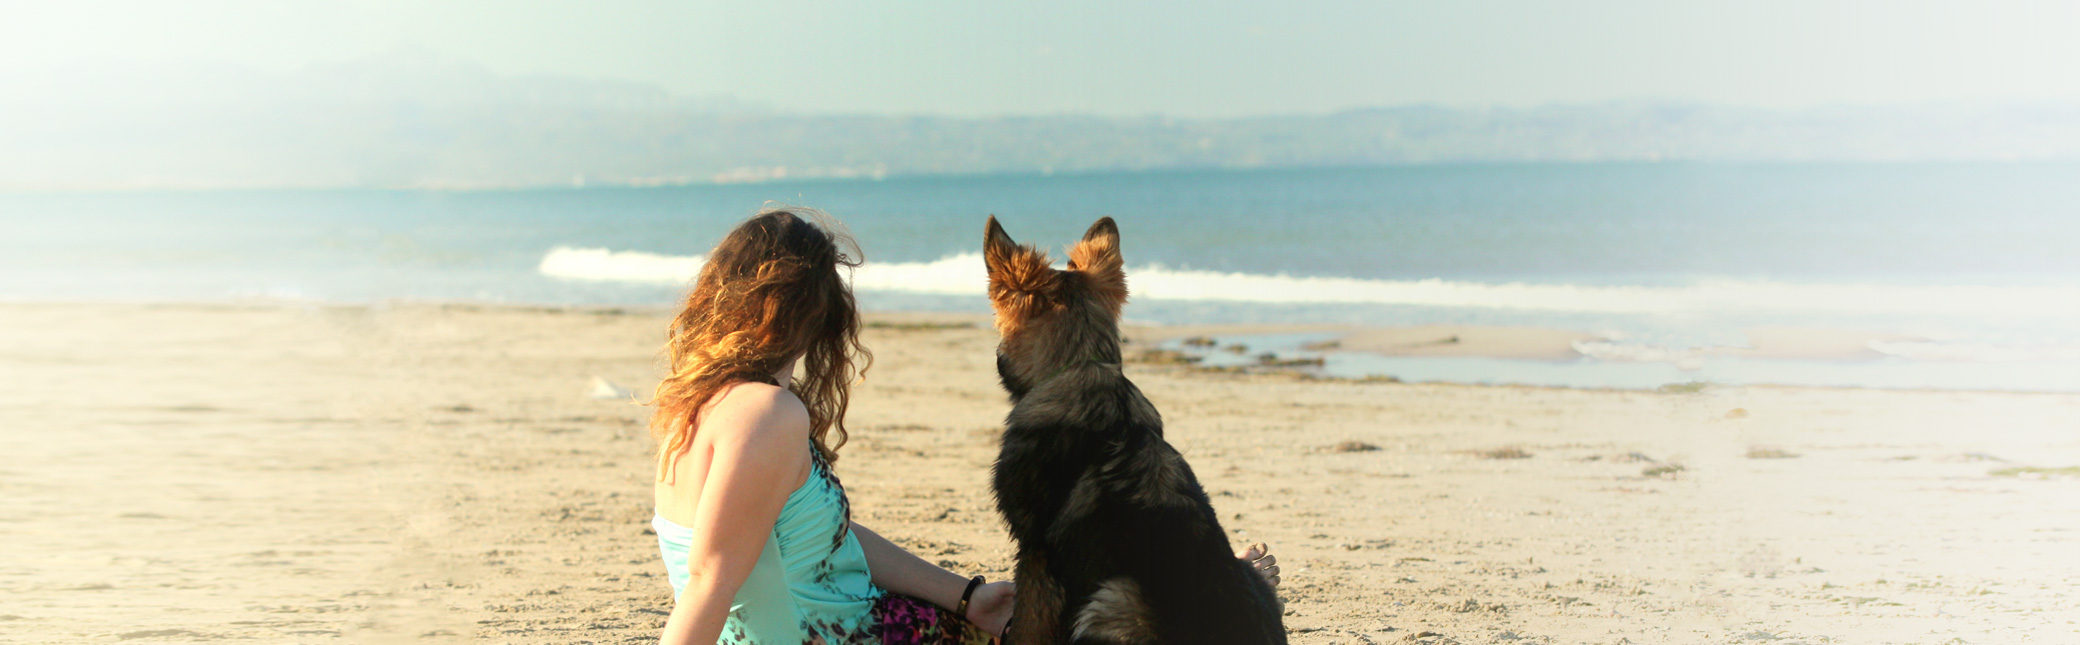 Strand Riumar mit Frau und Hund